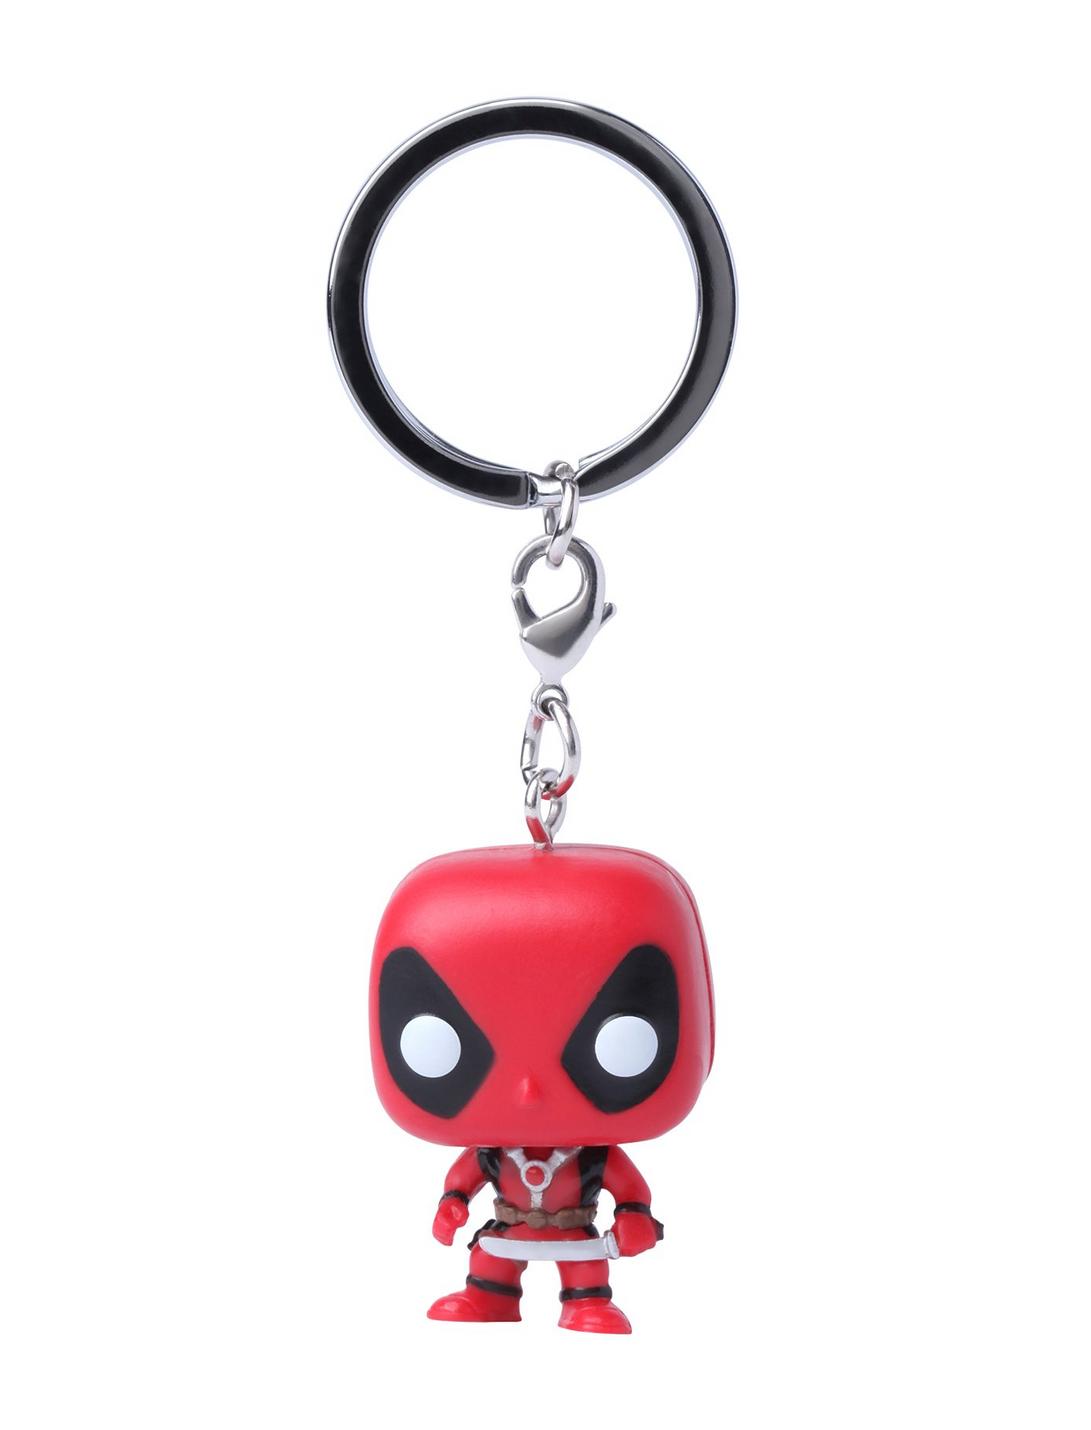 Details about   Deadpool with Swords Funko Pocket Pop mini figure keychain Marvel X-Men NEW! 